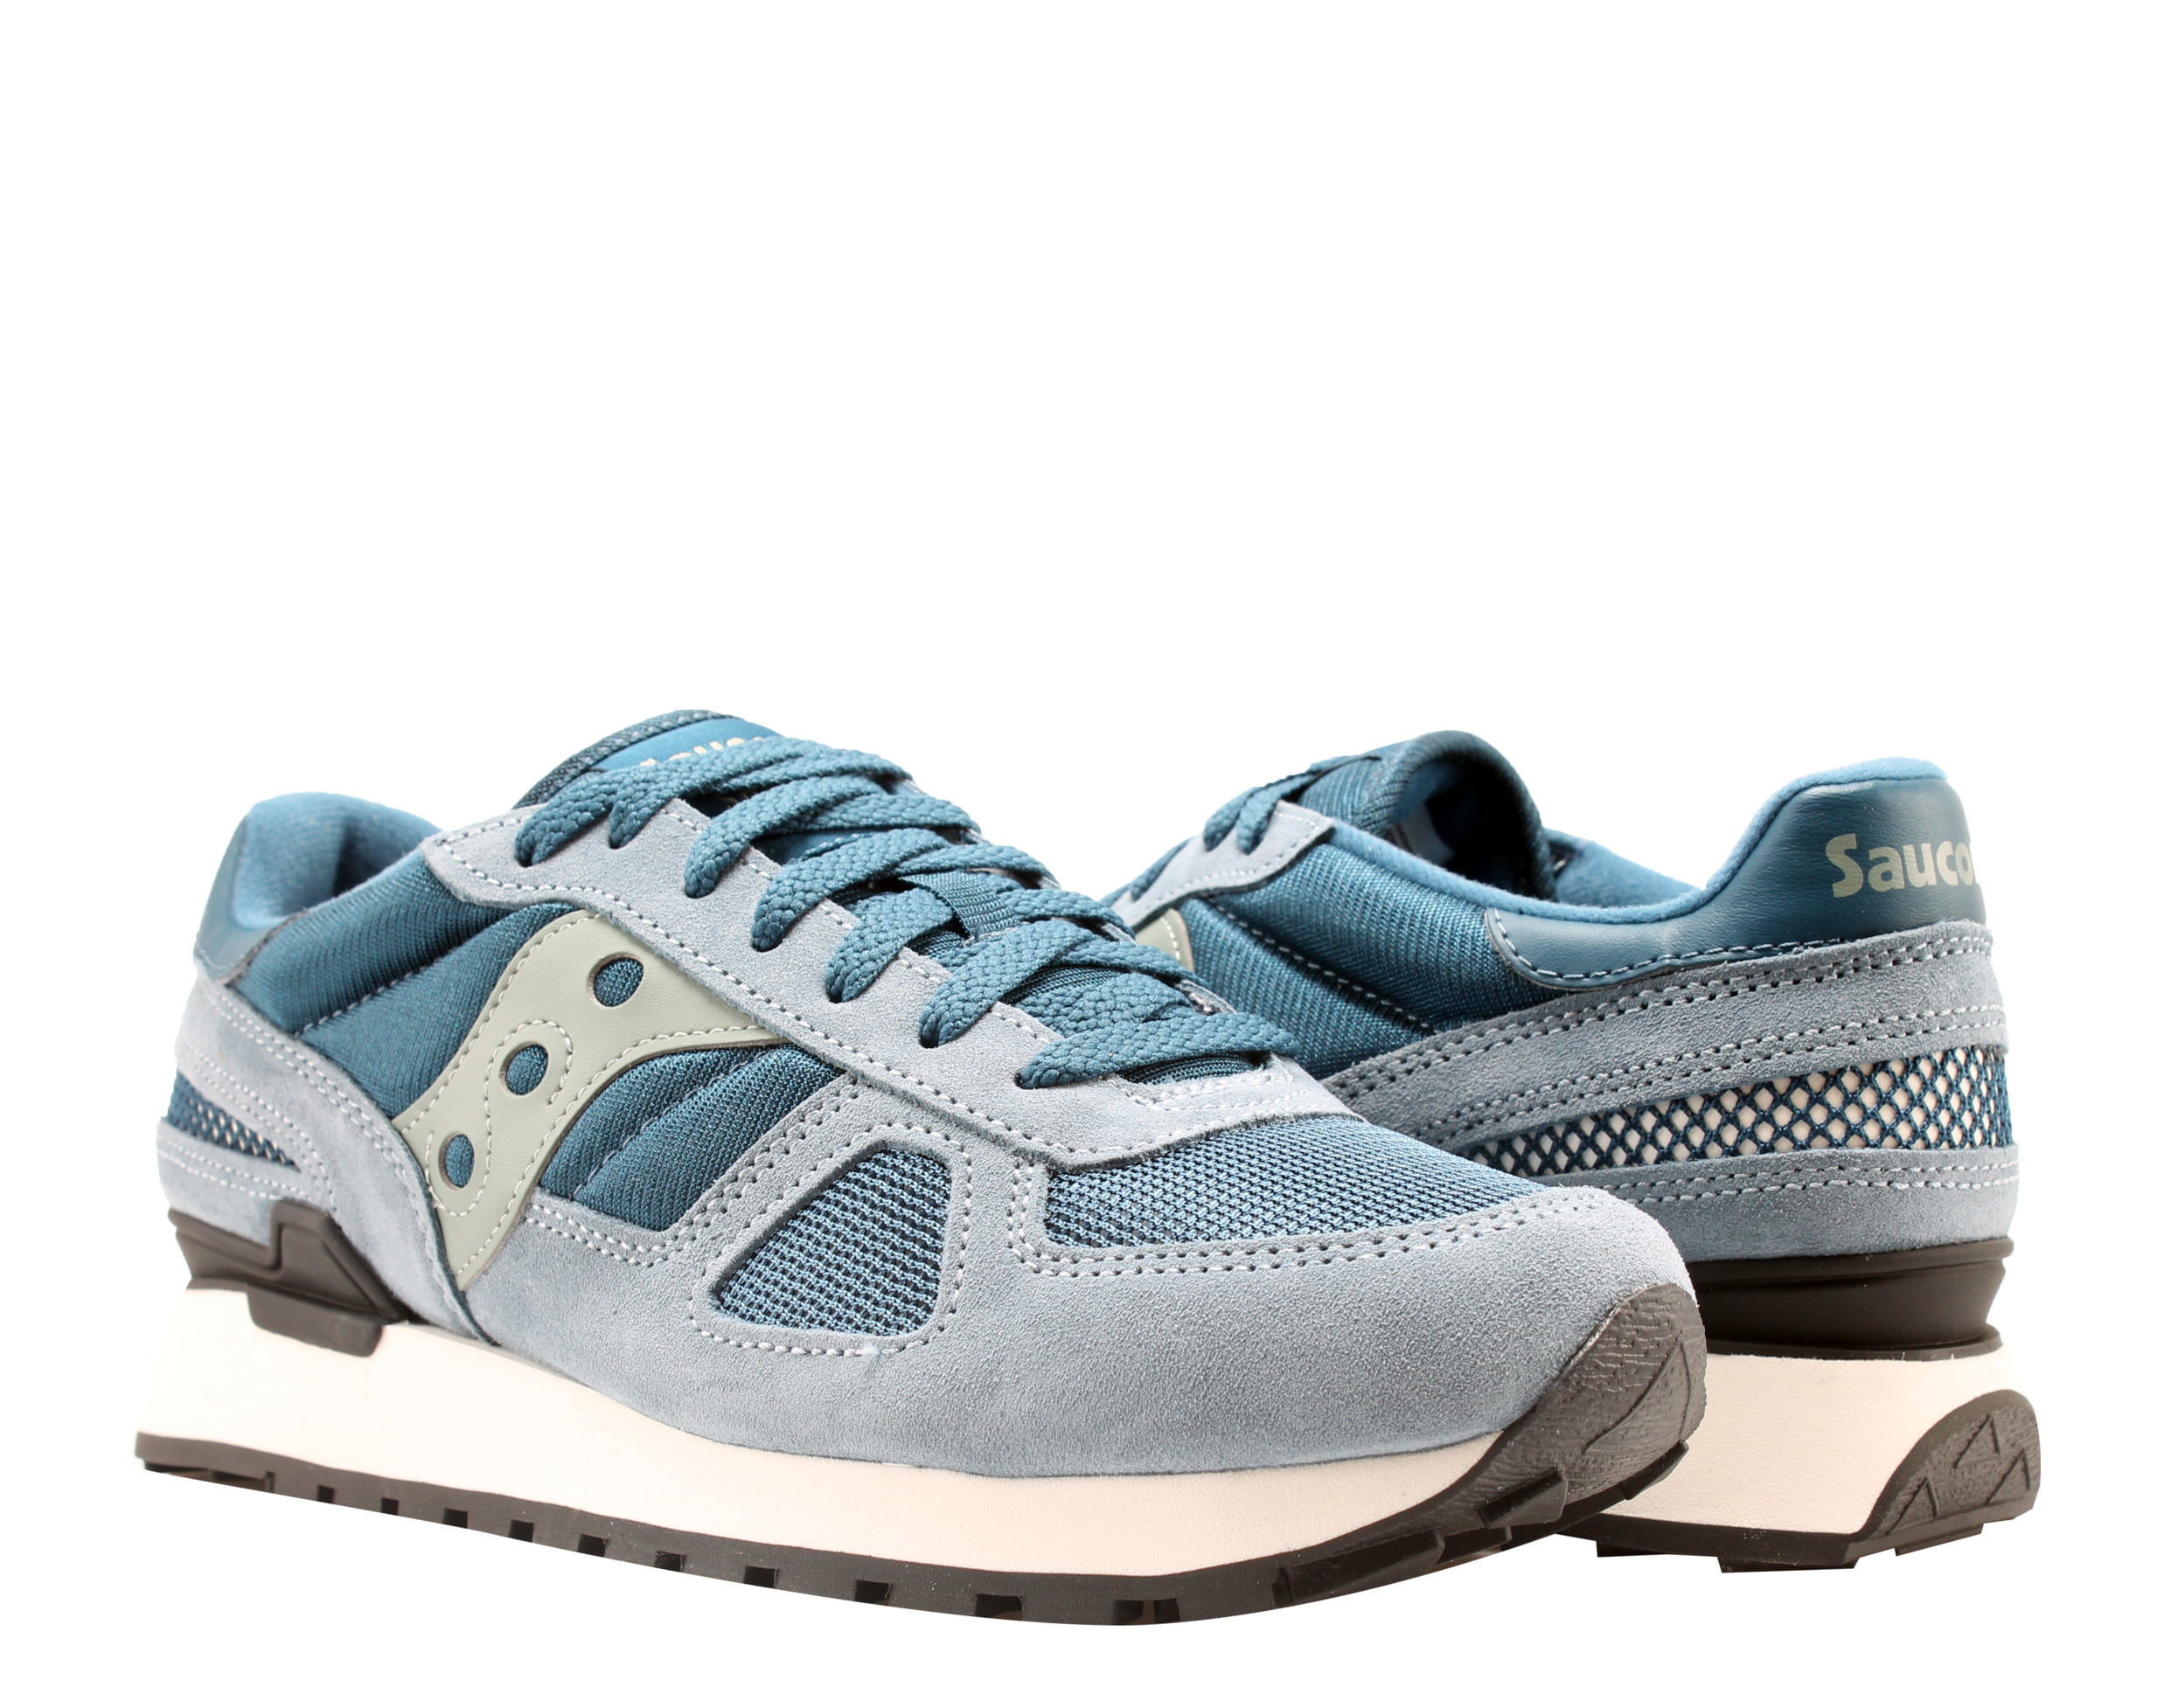 Saucony Shadow Original Blue/Blue/White Men's Running Shoes S2108-682